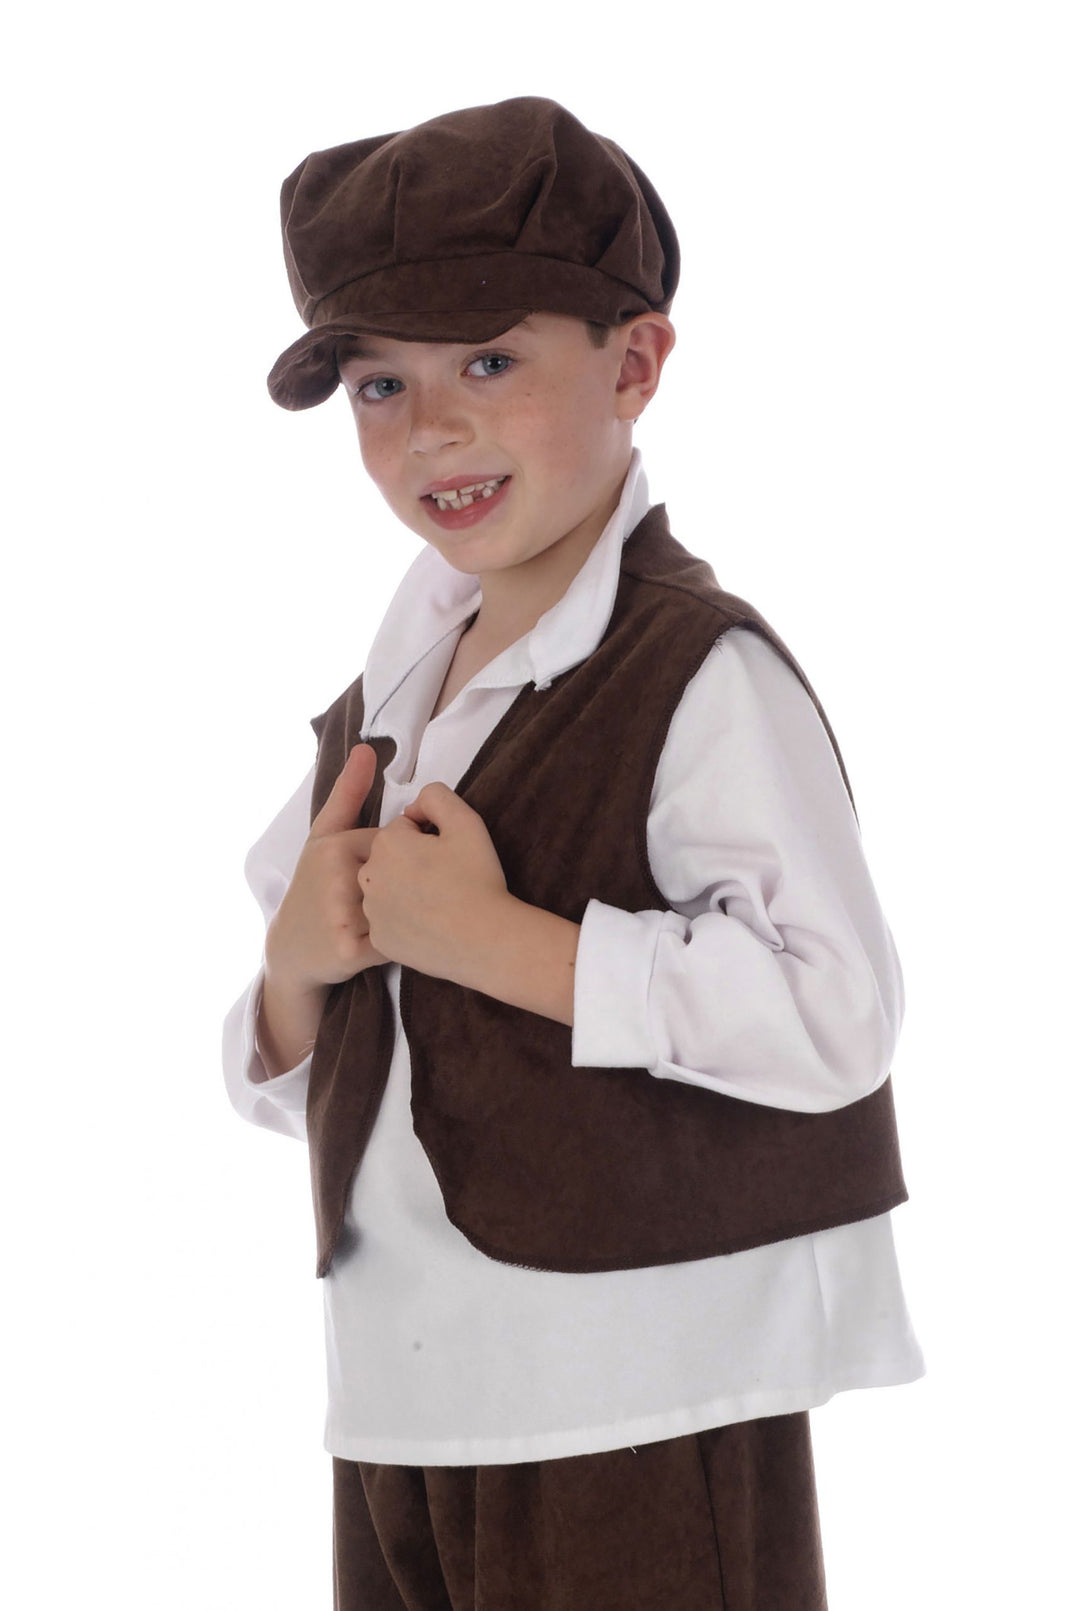 Boys Urchin Waistcoat Childs+b1628 Costume Accessories Male Halloween_1 BA738